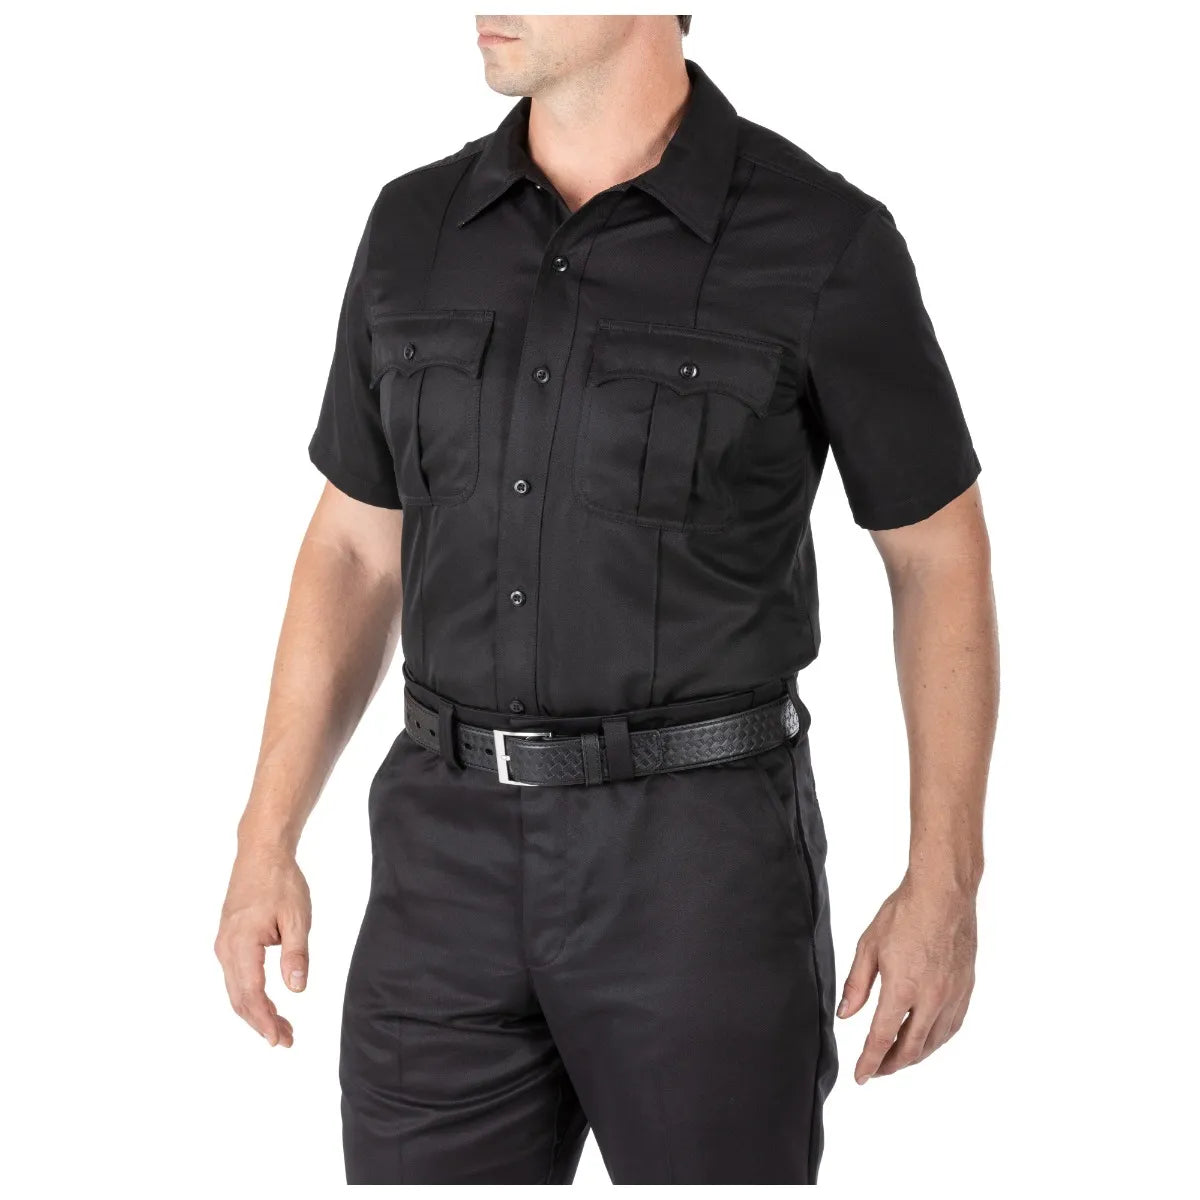 5.11 Tactical CL A Fast Tac Twill Uniform Shirts